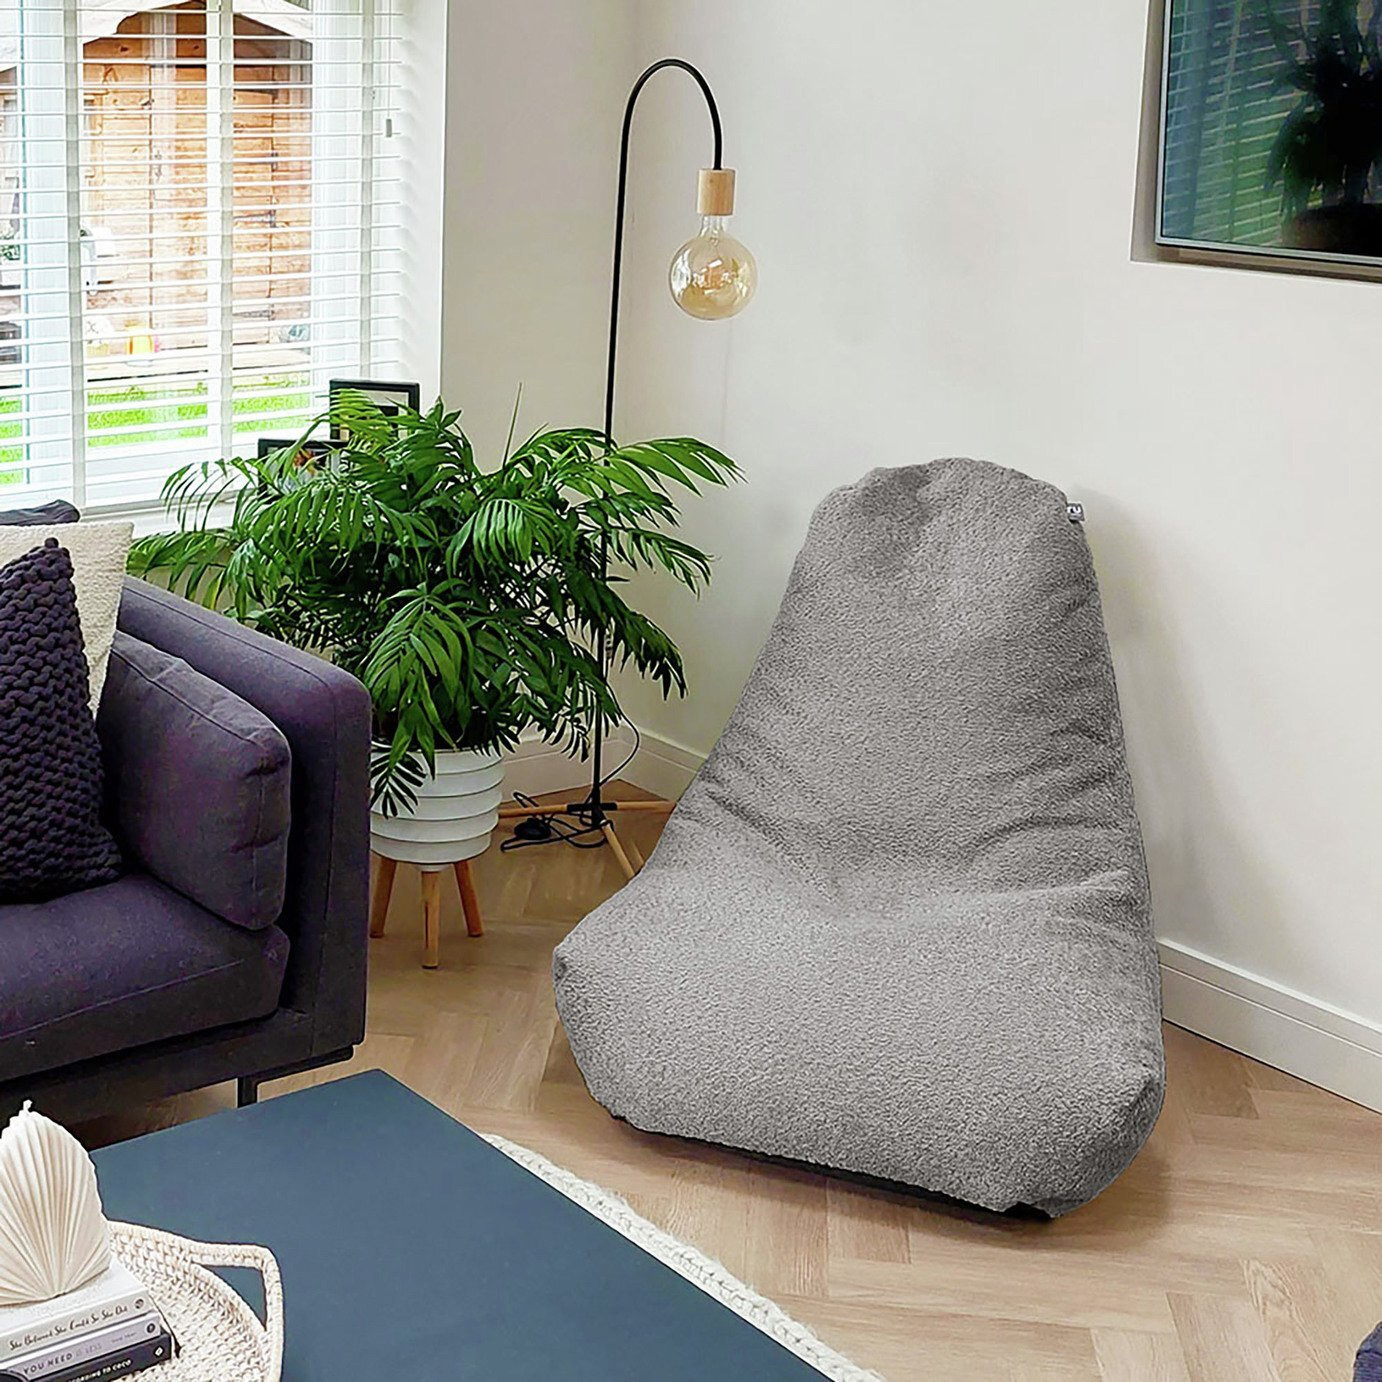 rucomfy Fabric Snug Bean Bag Chair - Light Grey - image 1